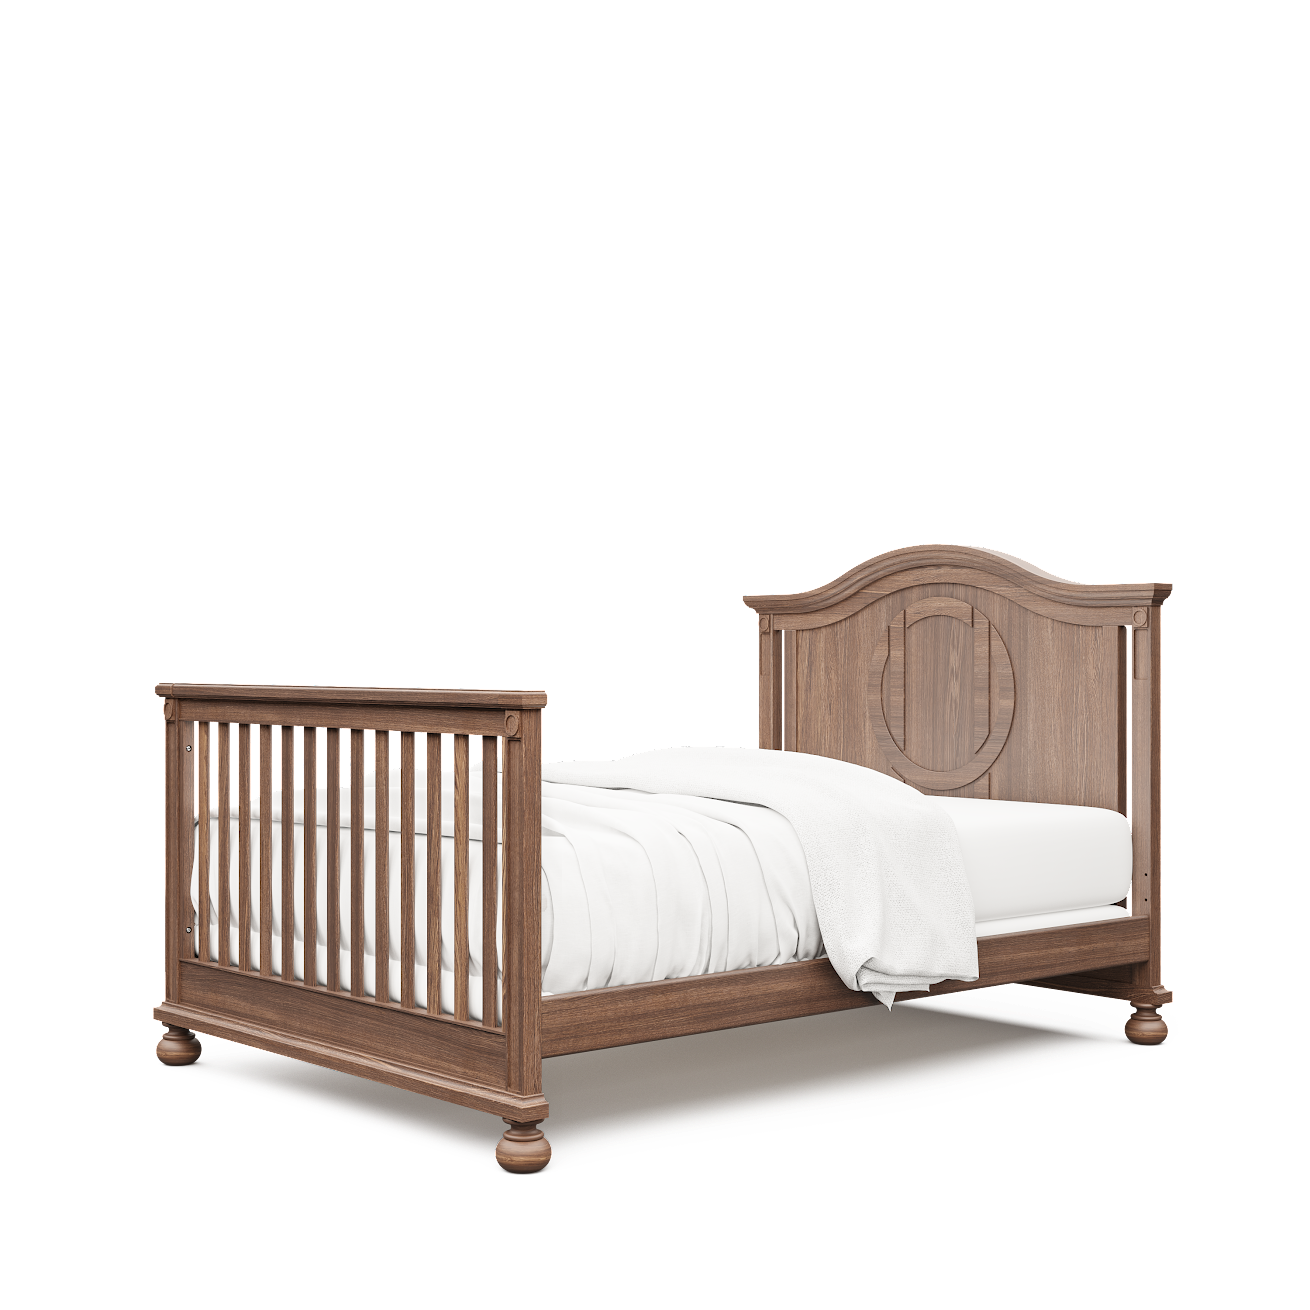 Dakota crib converted to full bed, in nocello